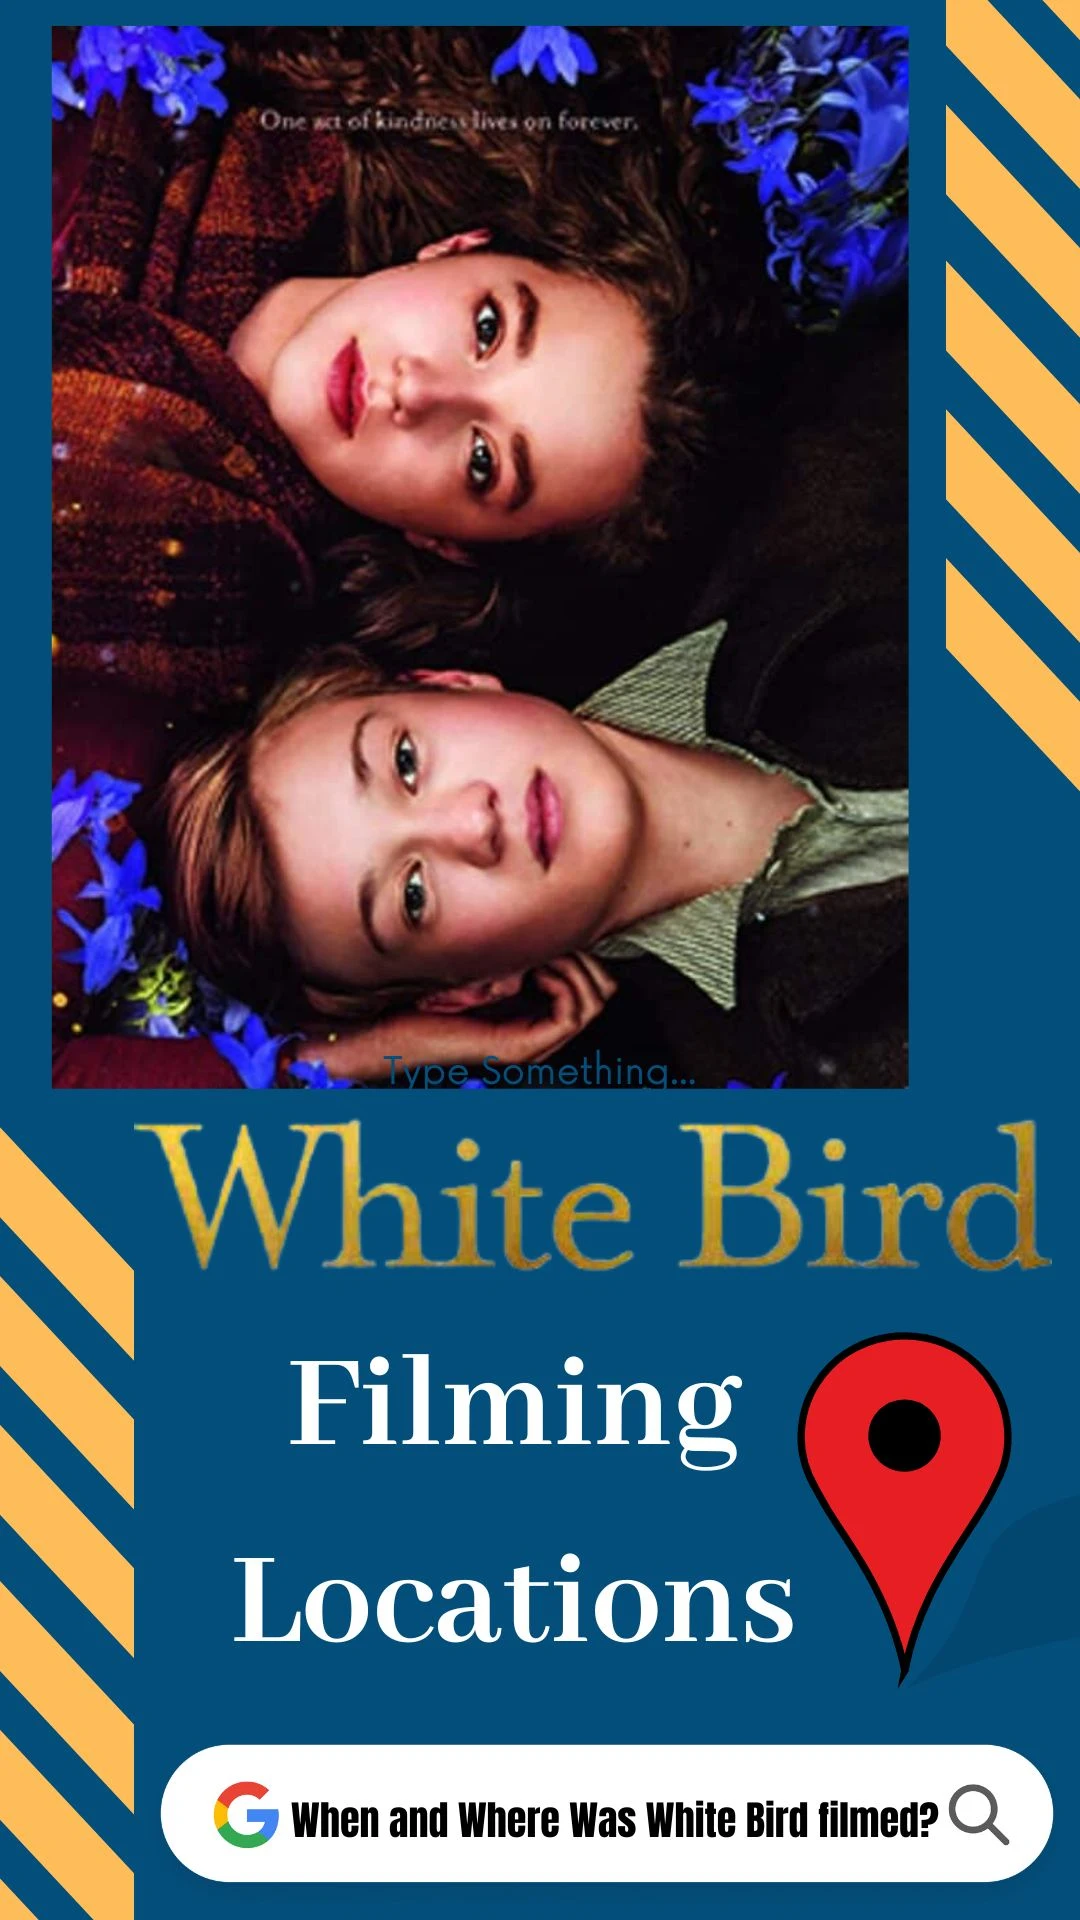 White Bird Filming Locations